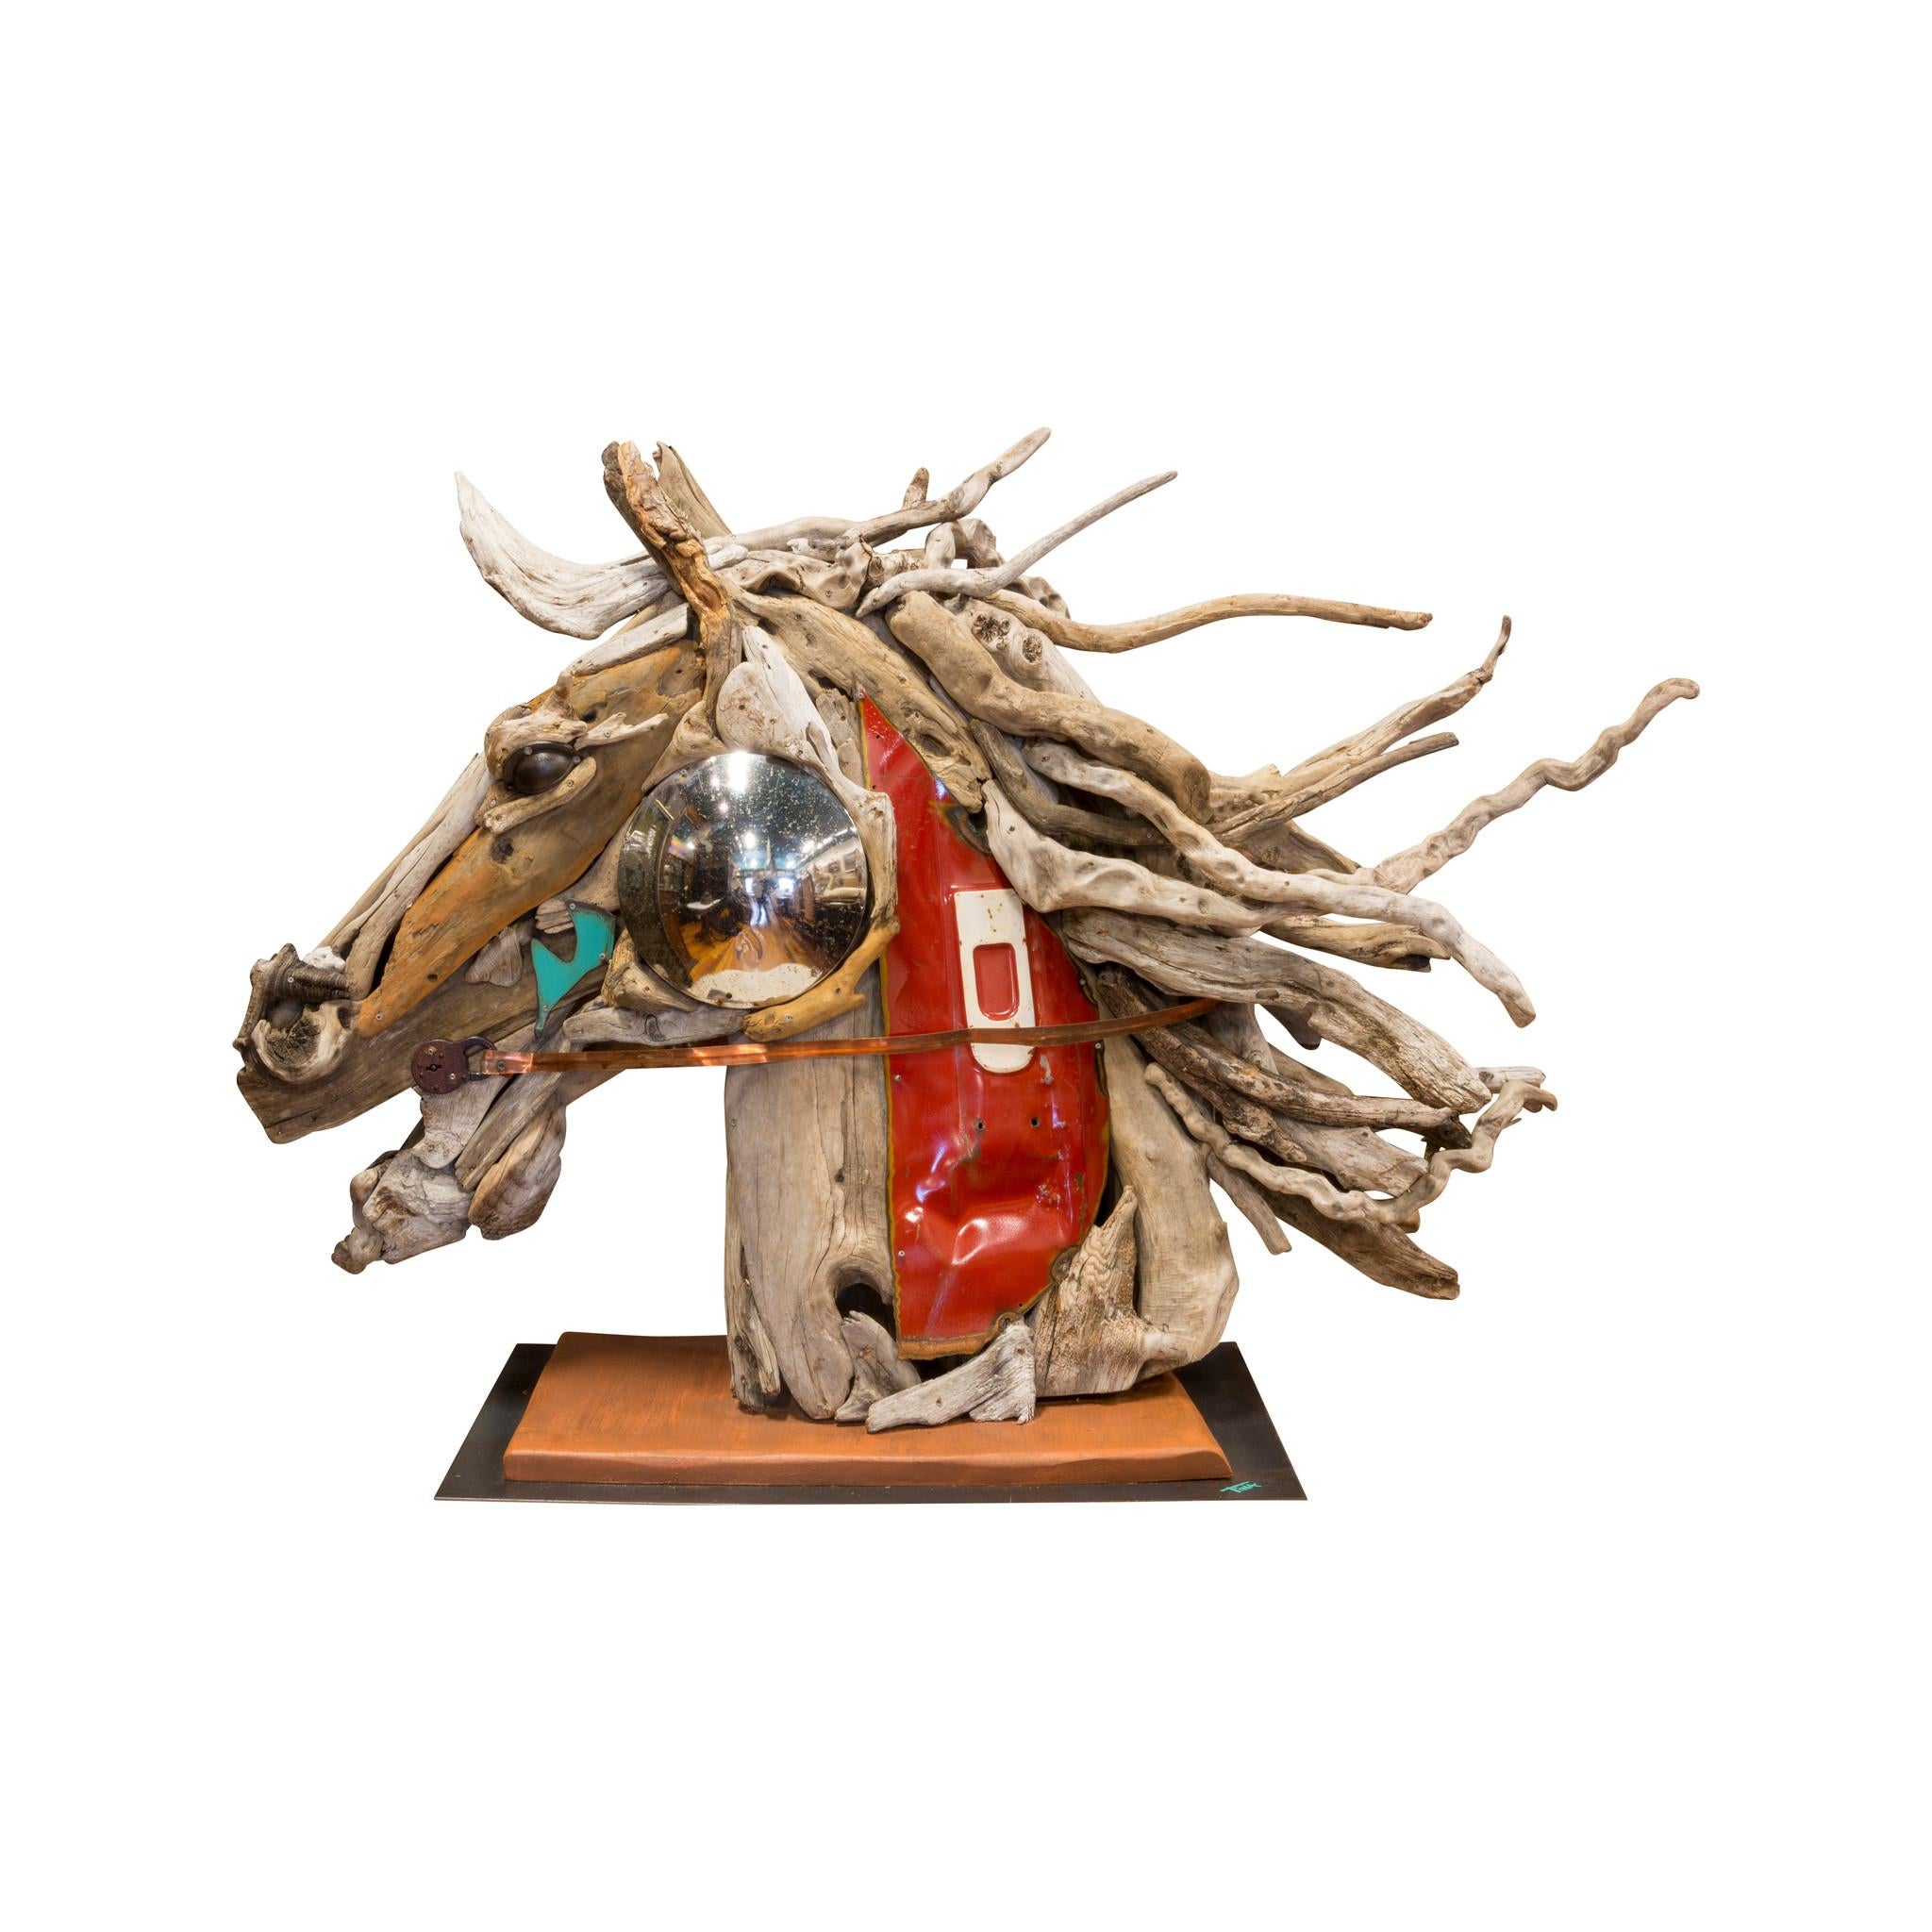 Driftwood horse of driftwood and scrap yard steel by a Montana artist.
Period: Contemporary
Origin: Montana
Size: 50